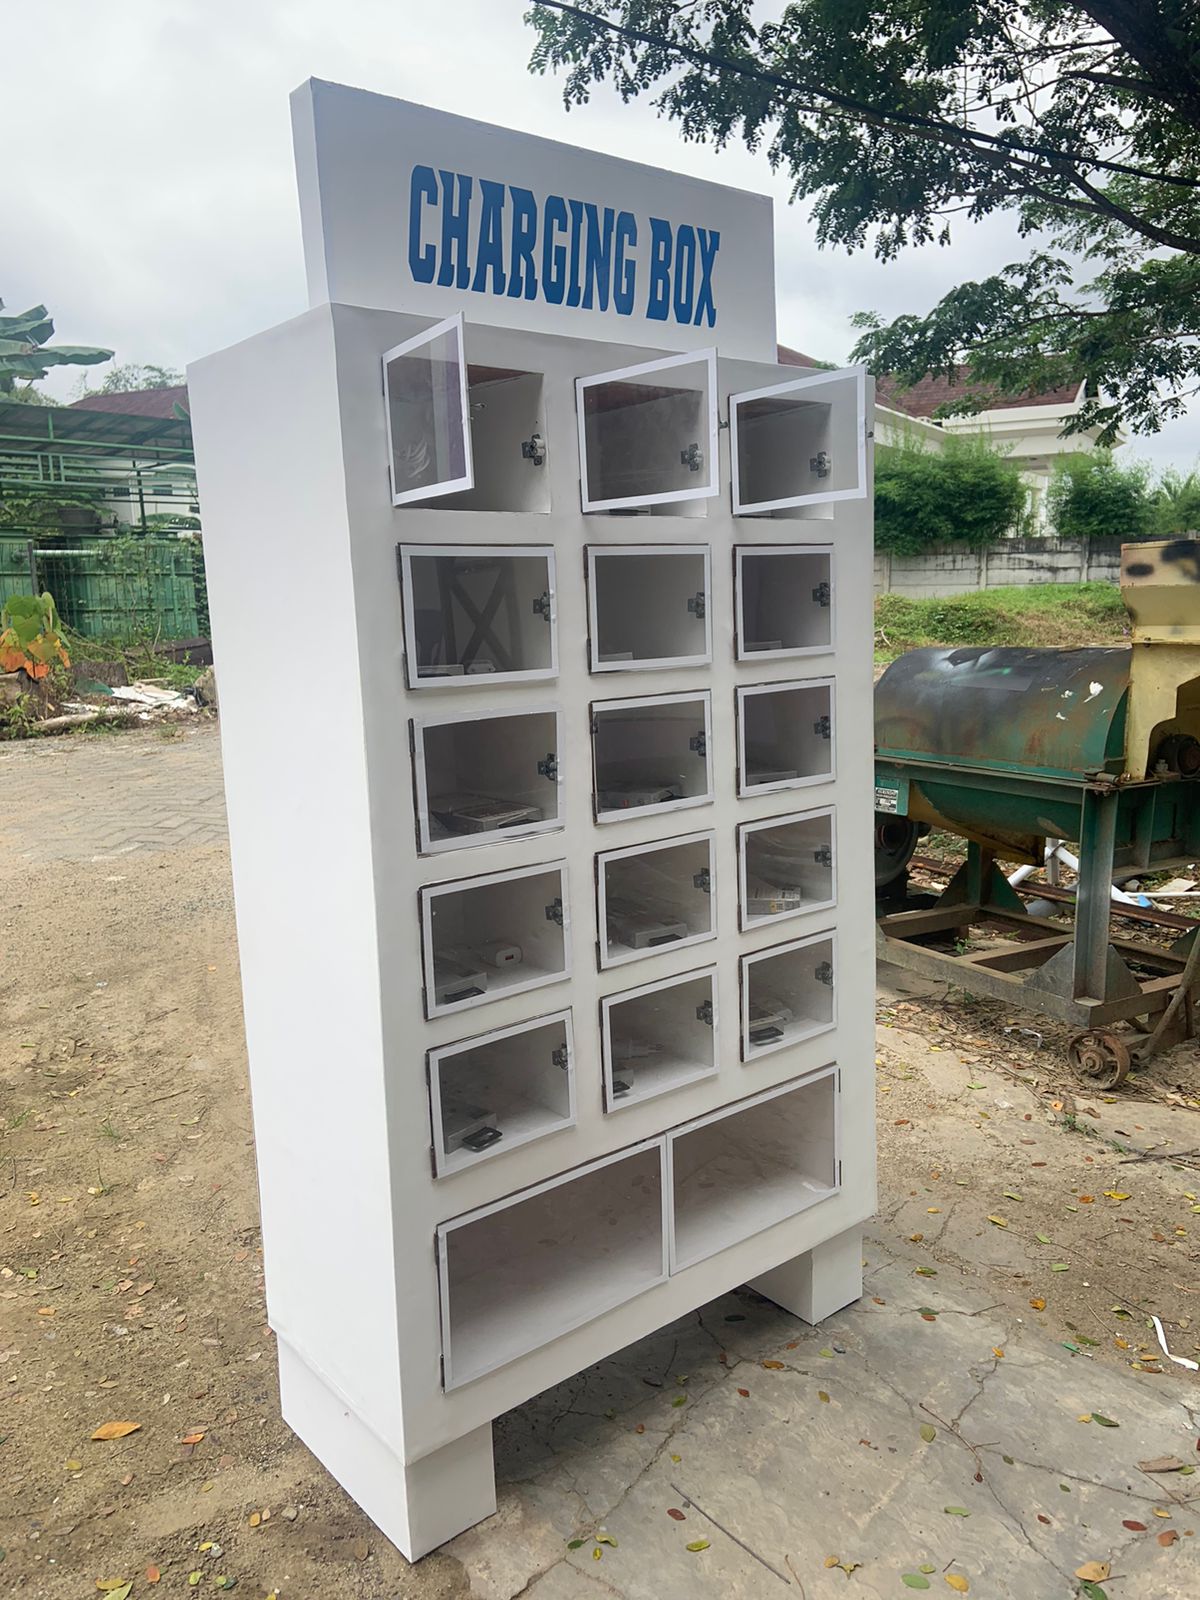 Charging Box